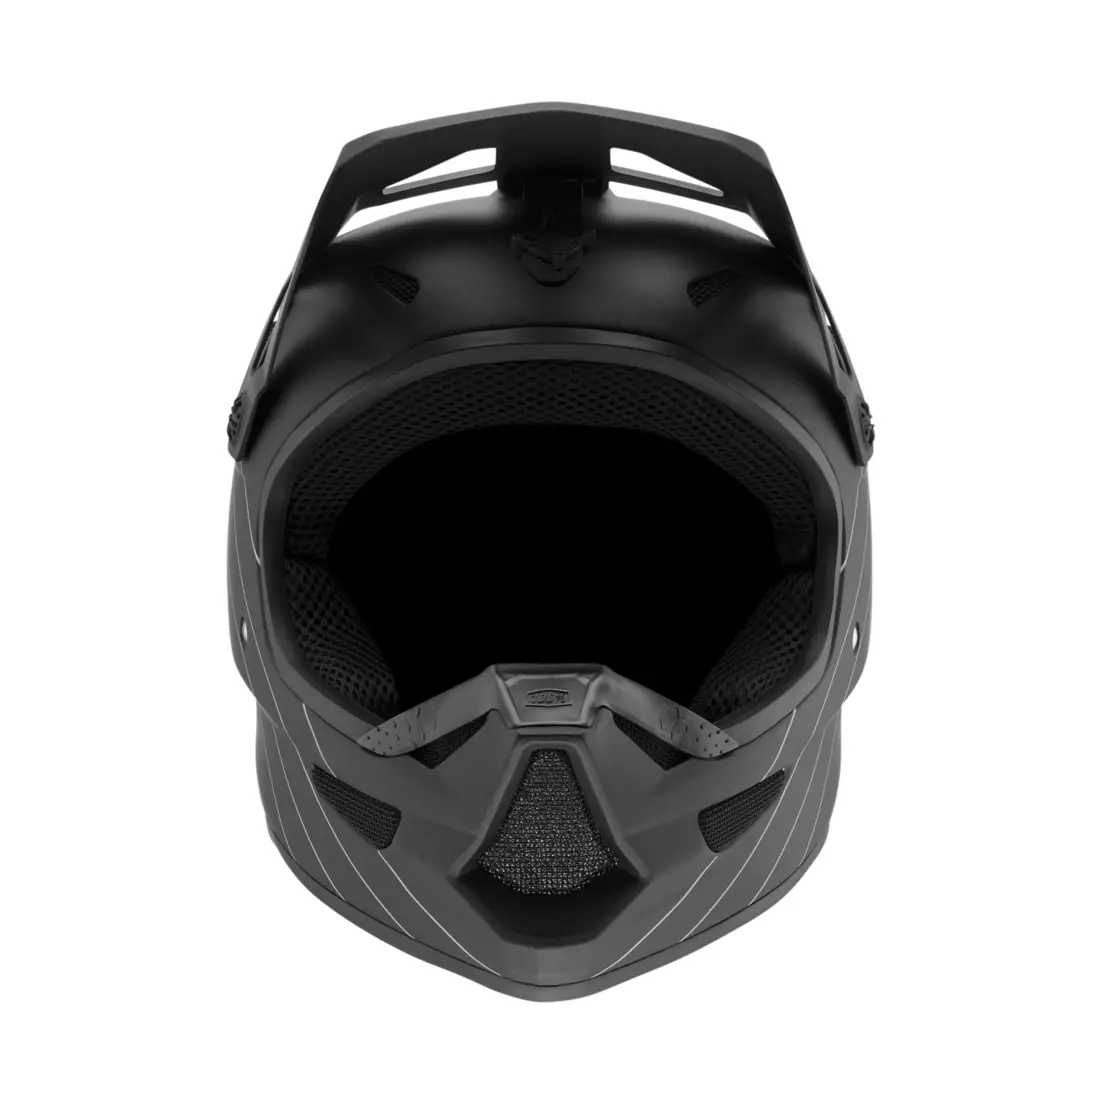 100% kask rowerowy full face STATUS DH/BMX Helmet Essential black STO-80011-001-09